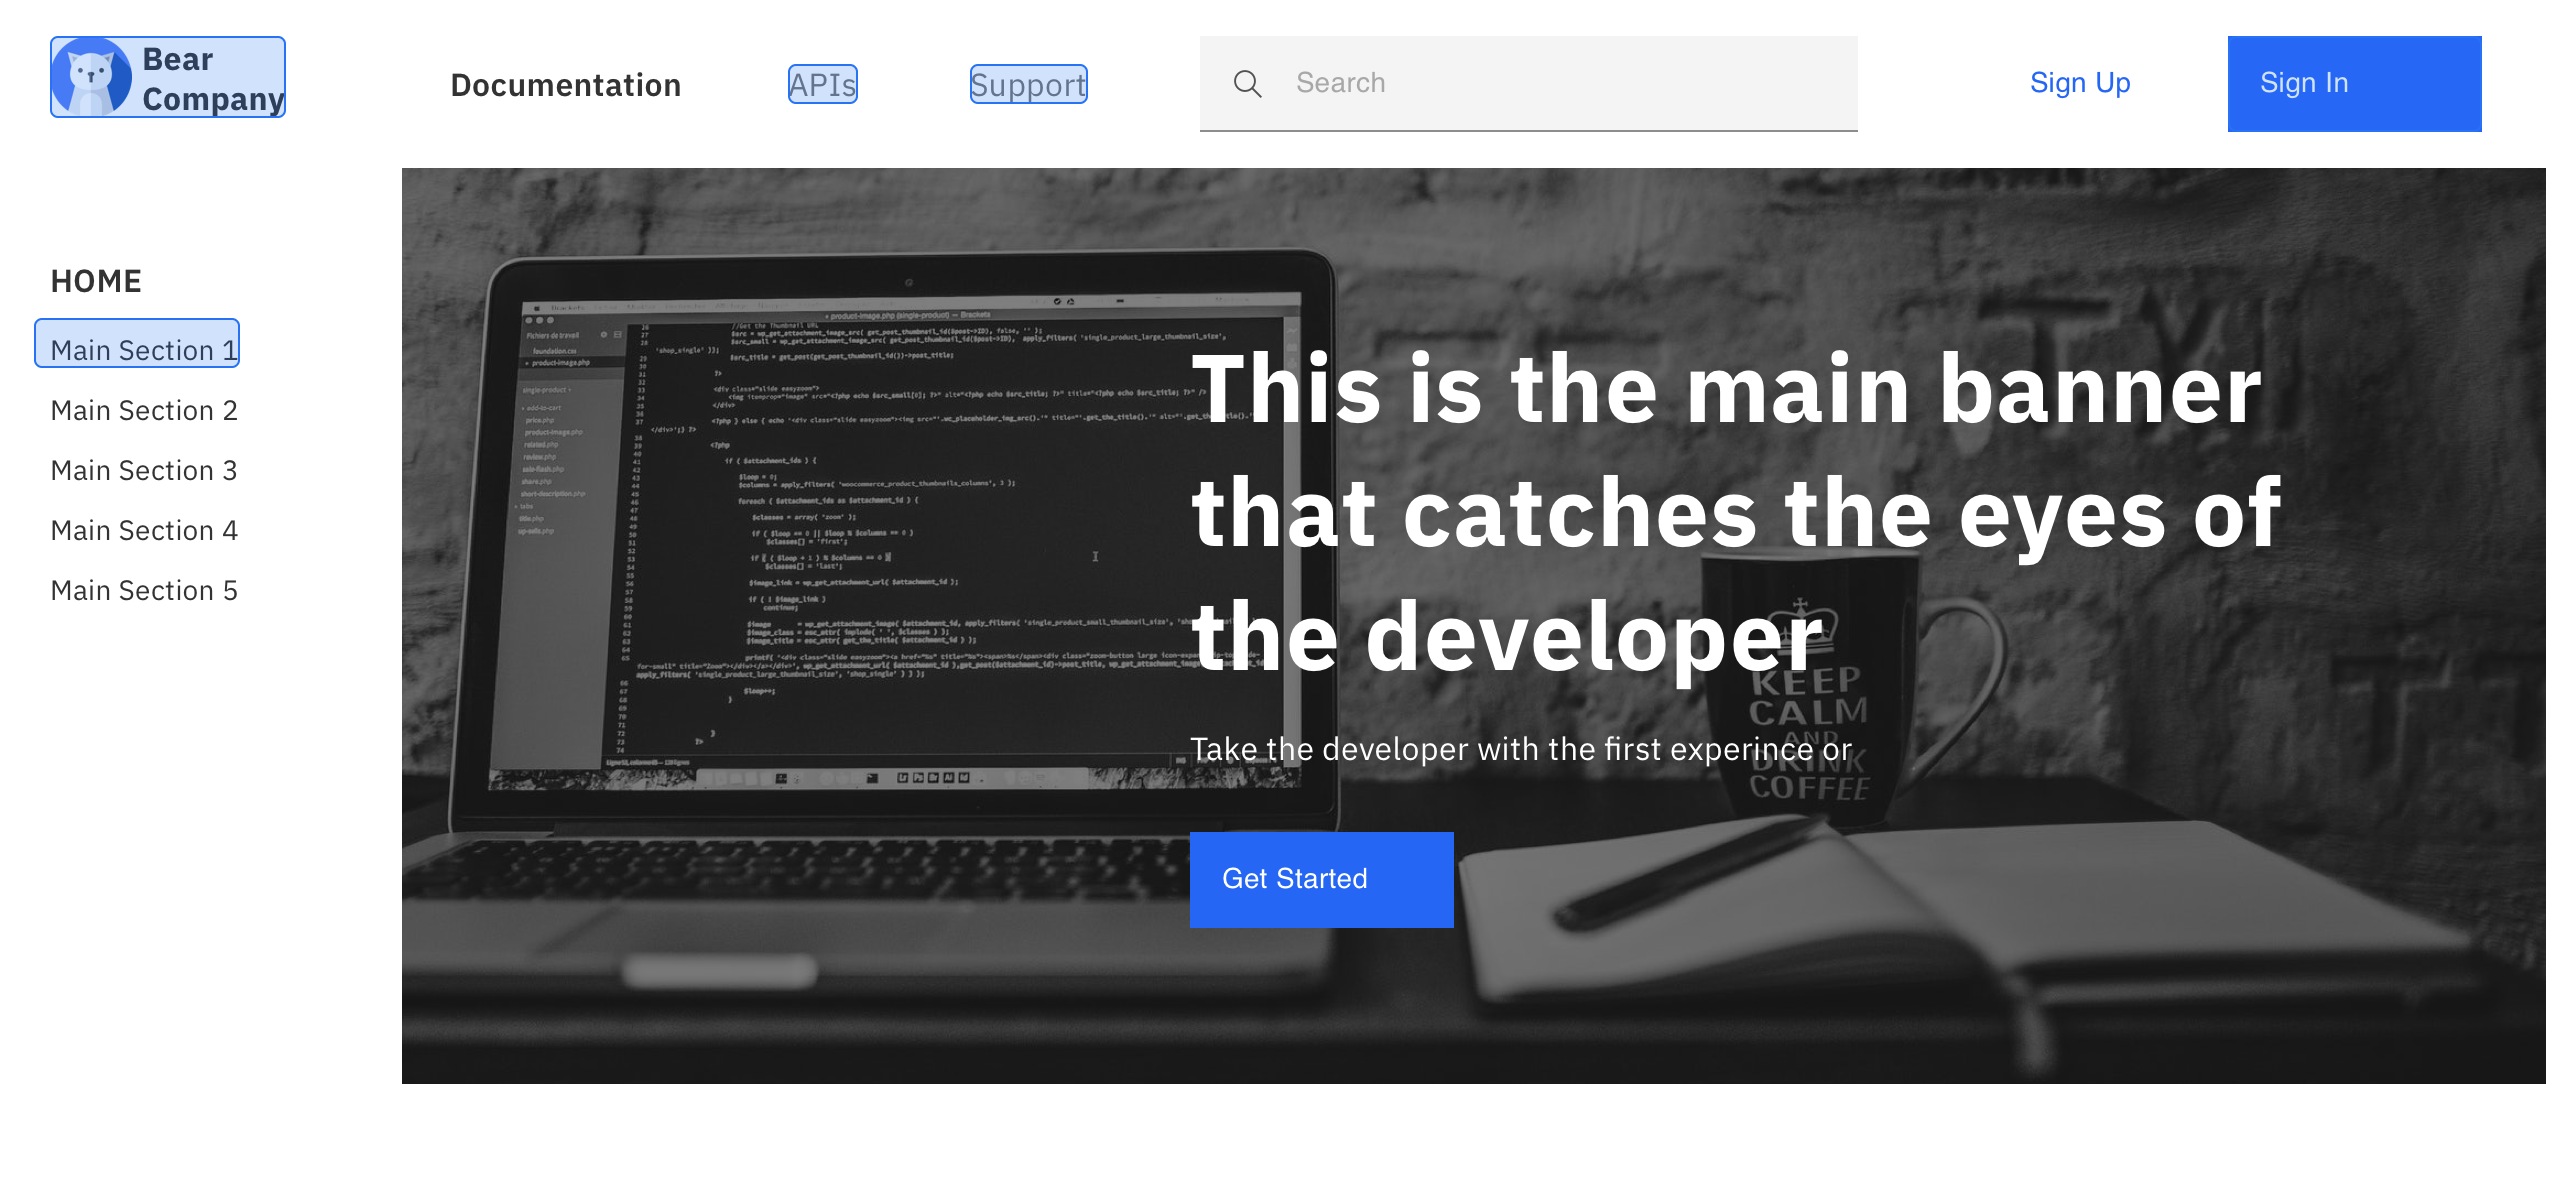 Why we should build a Developer Portal